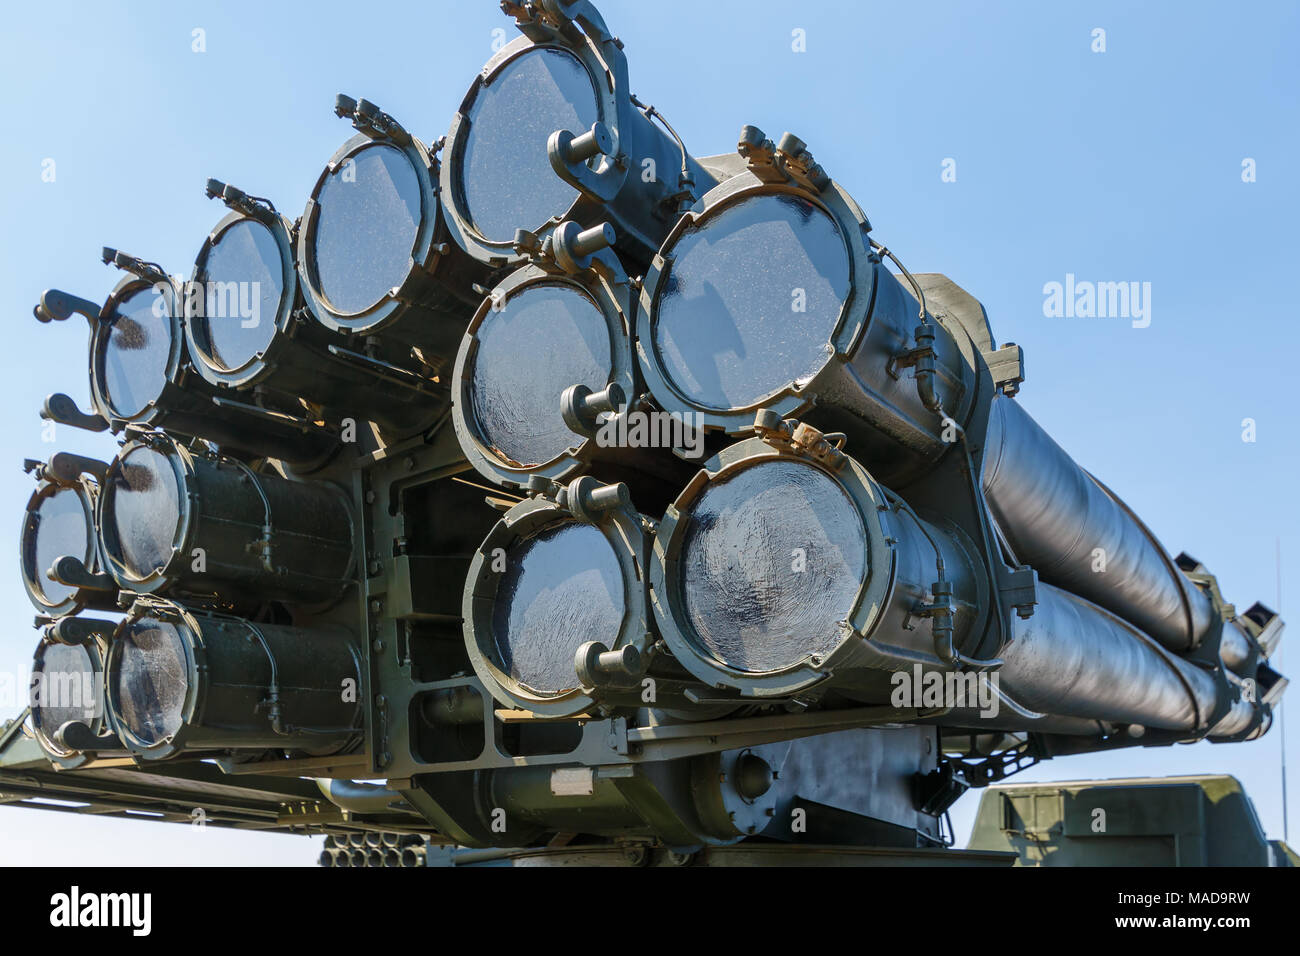 KADAMOVSKIY TRAINING GROUND, ROSTOV REGION, RUSSIA, 26 AUGUST 2017: Soviet heavy multiple rocket launcher 9A52-2 SMERCH Stock Photo